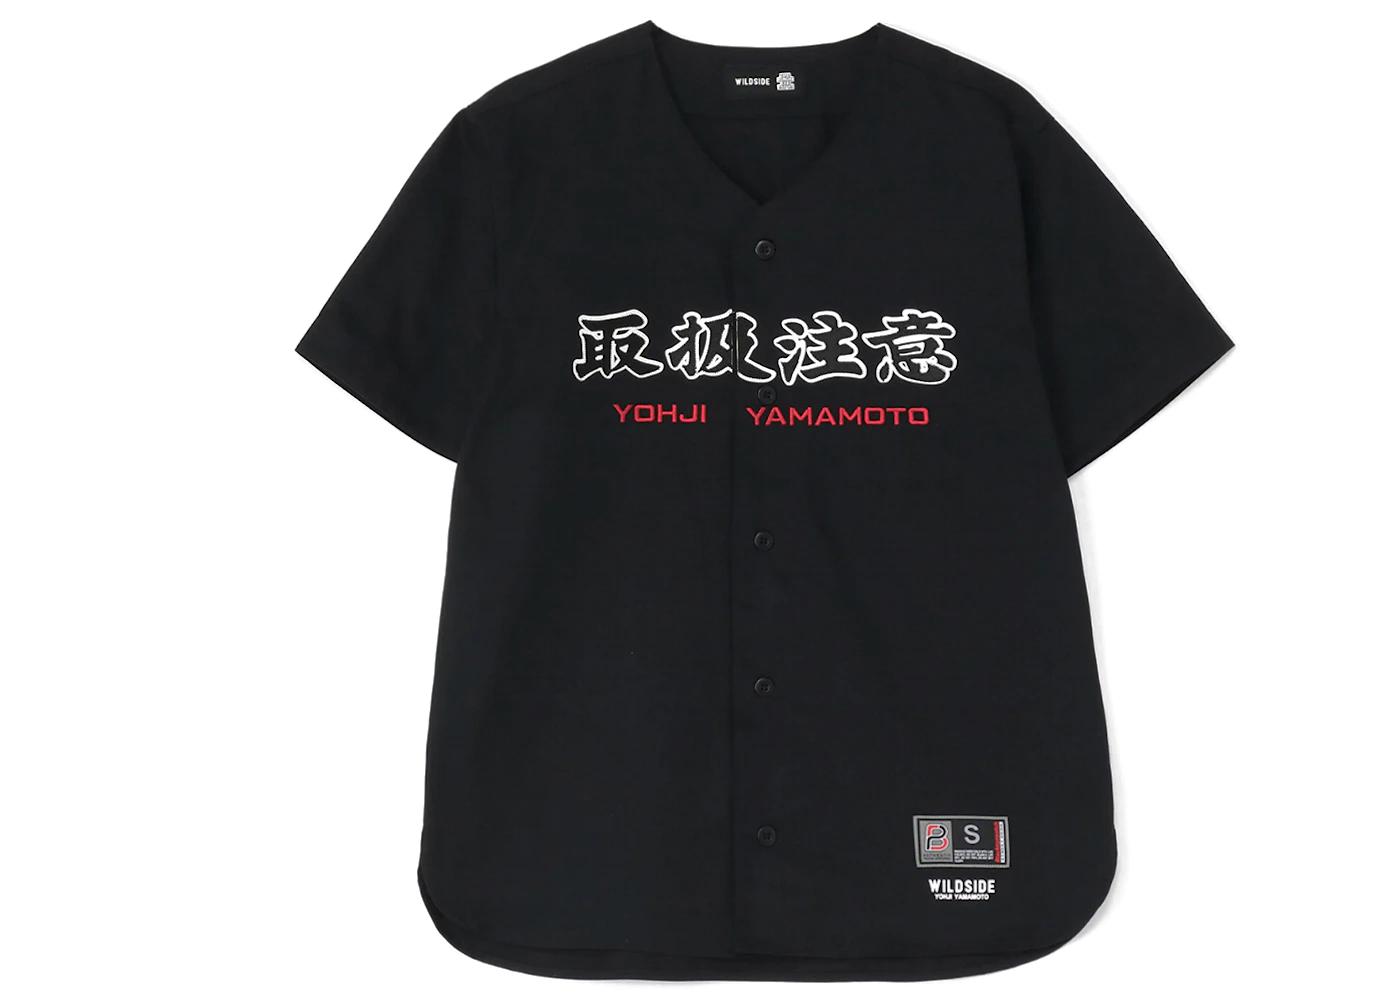 BlackEyePatch x Wildside Yohji Yamamoto Baseball Shirt Black by BLACKEYEPATCH